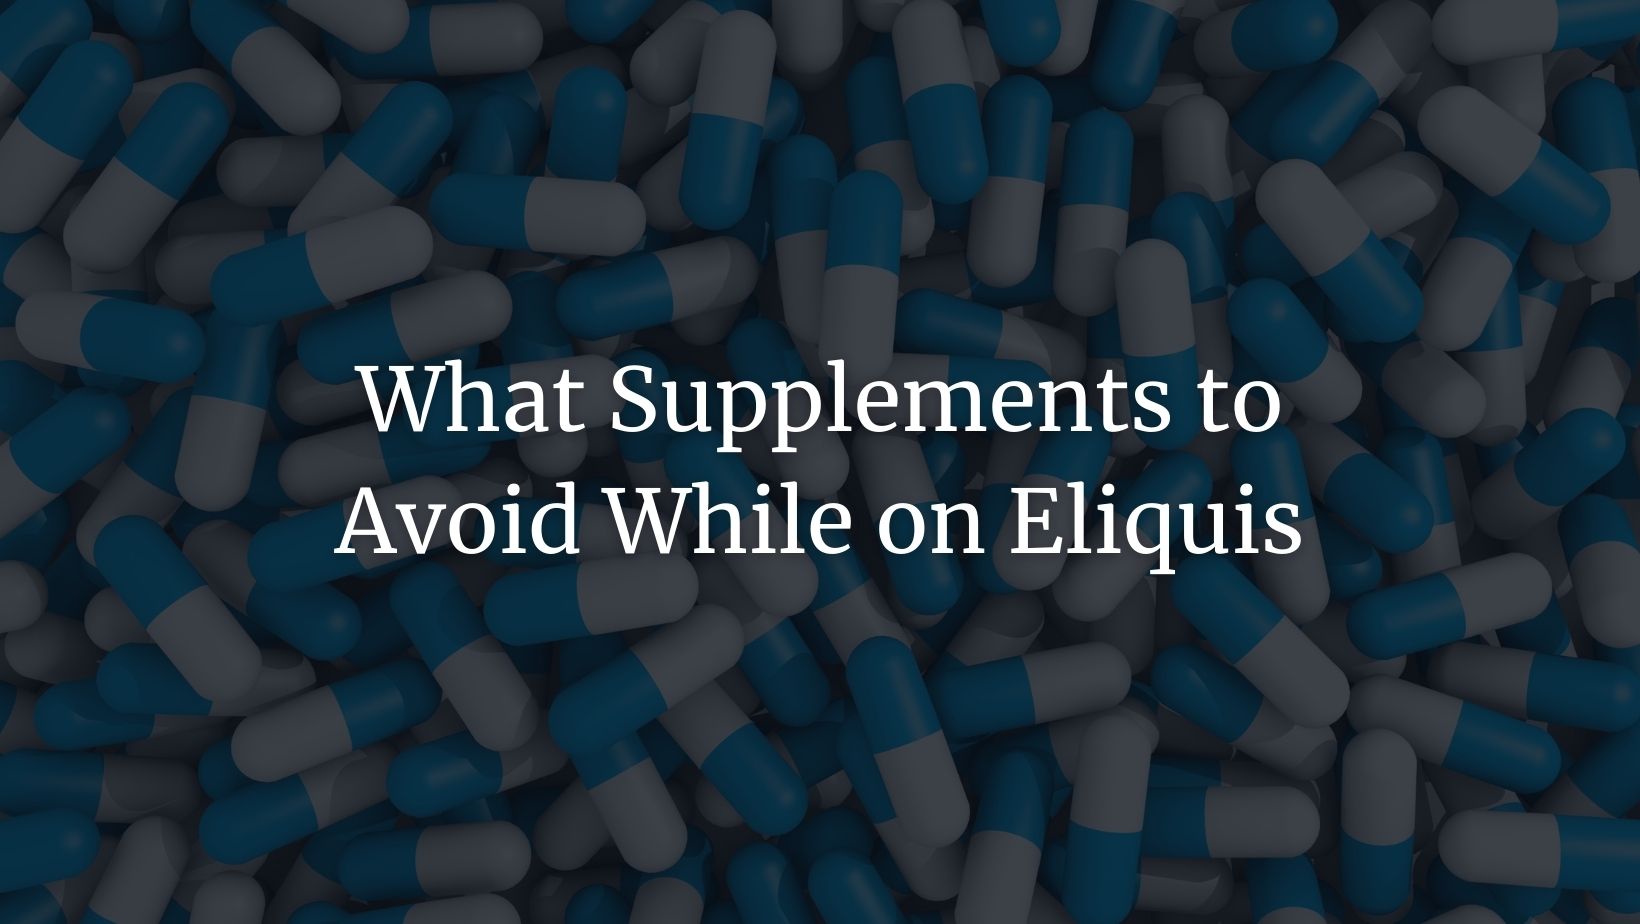 Eliquis supplement featured image